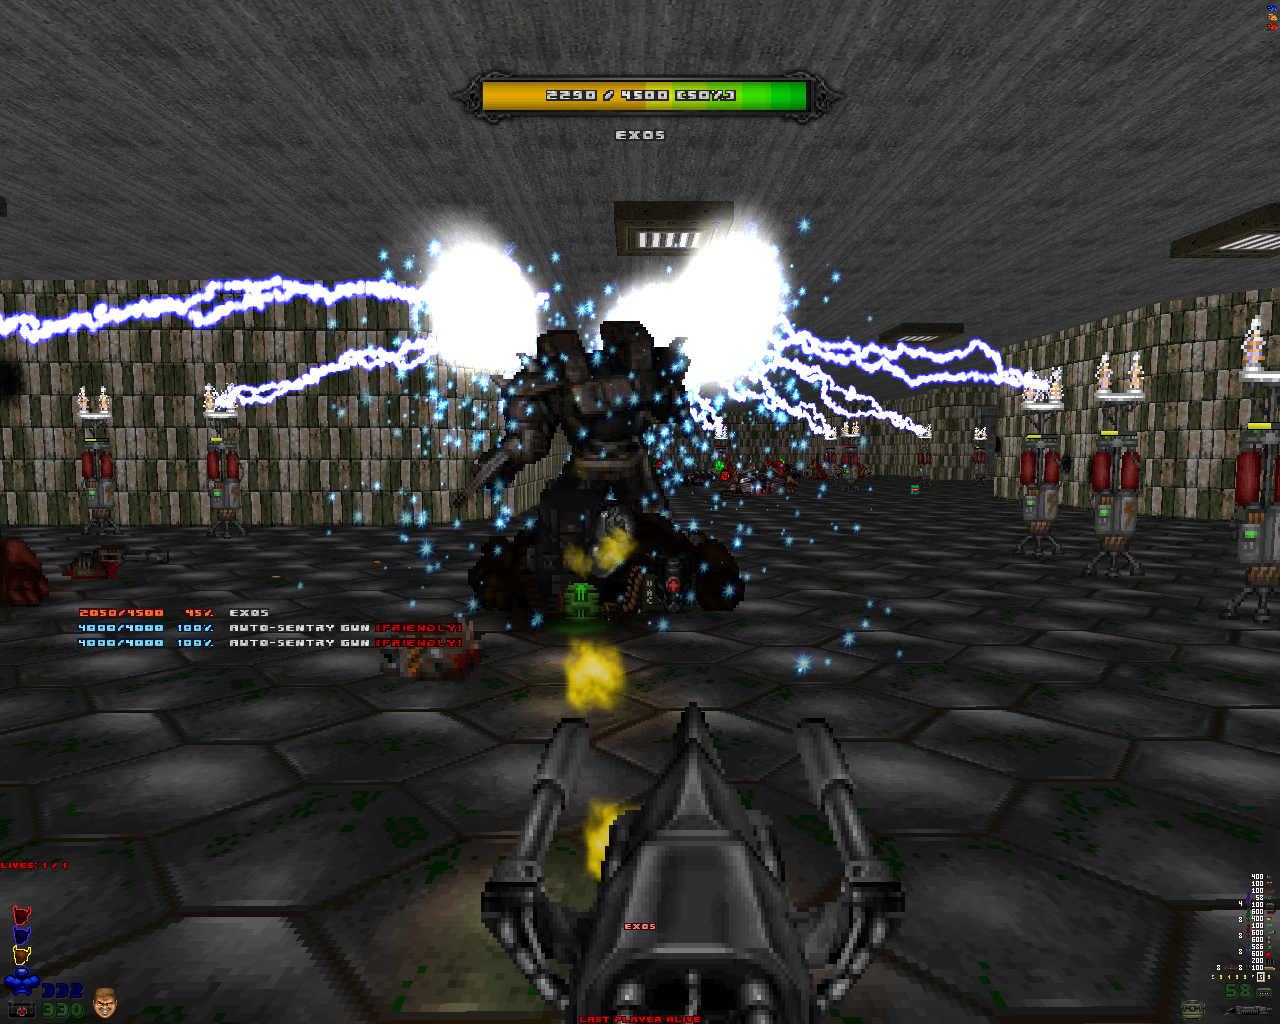 Image 5 - LI $TeR's Simple Doom mod for Doom II.